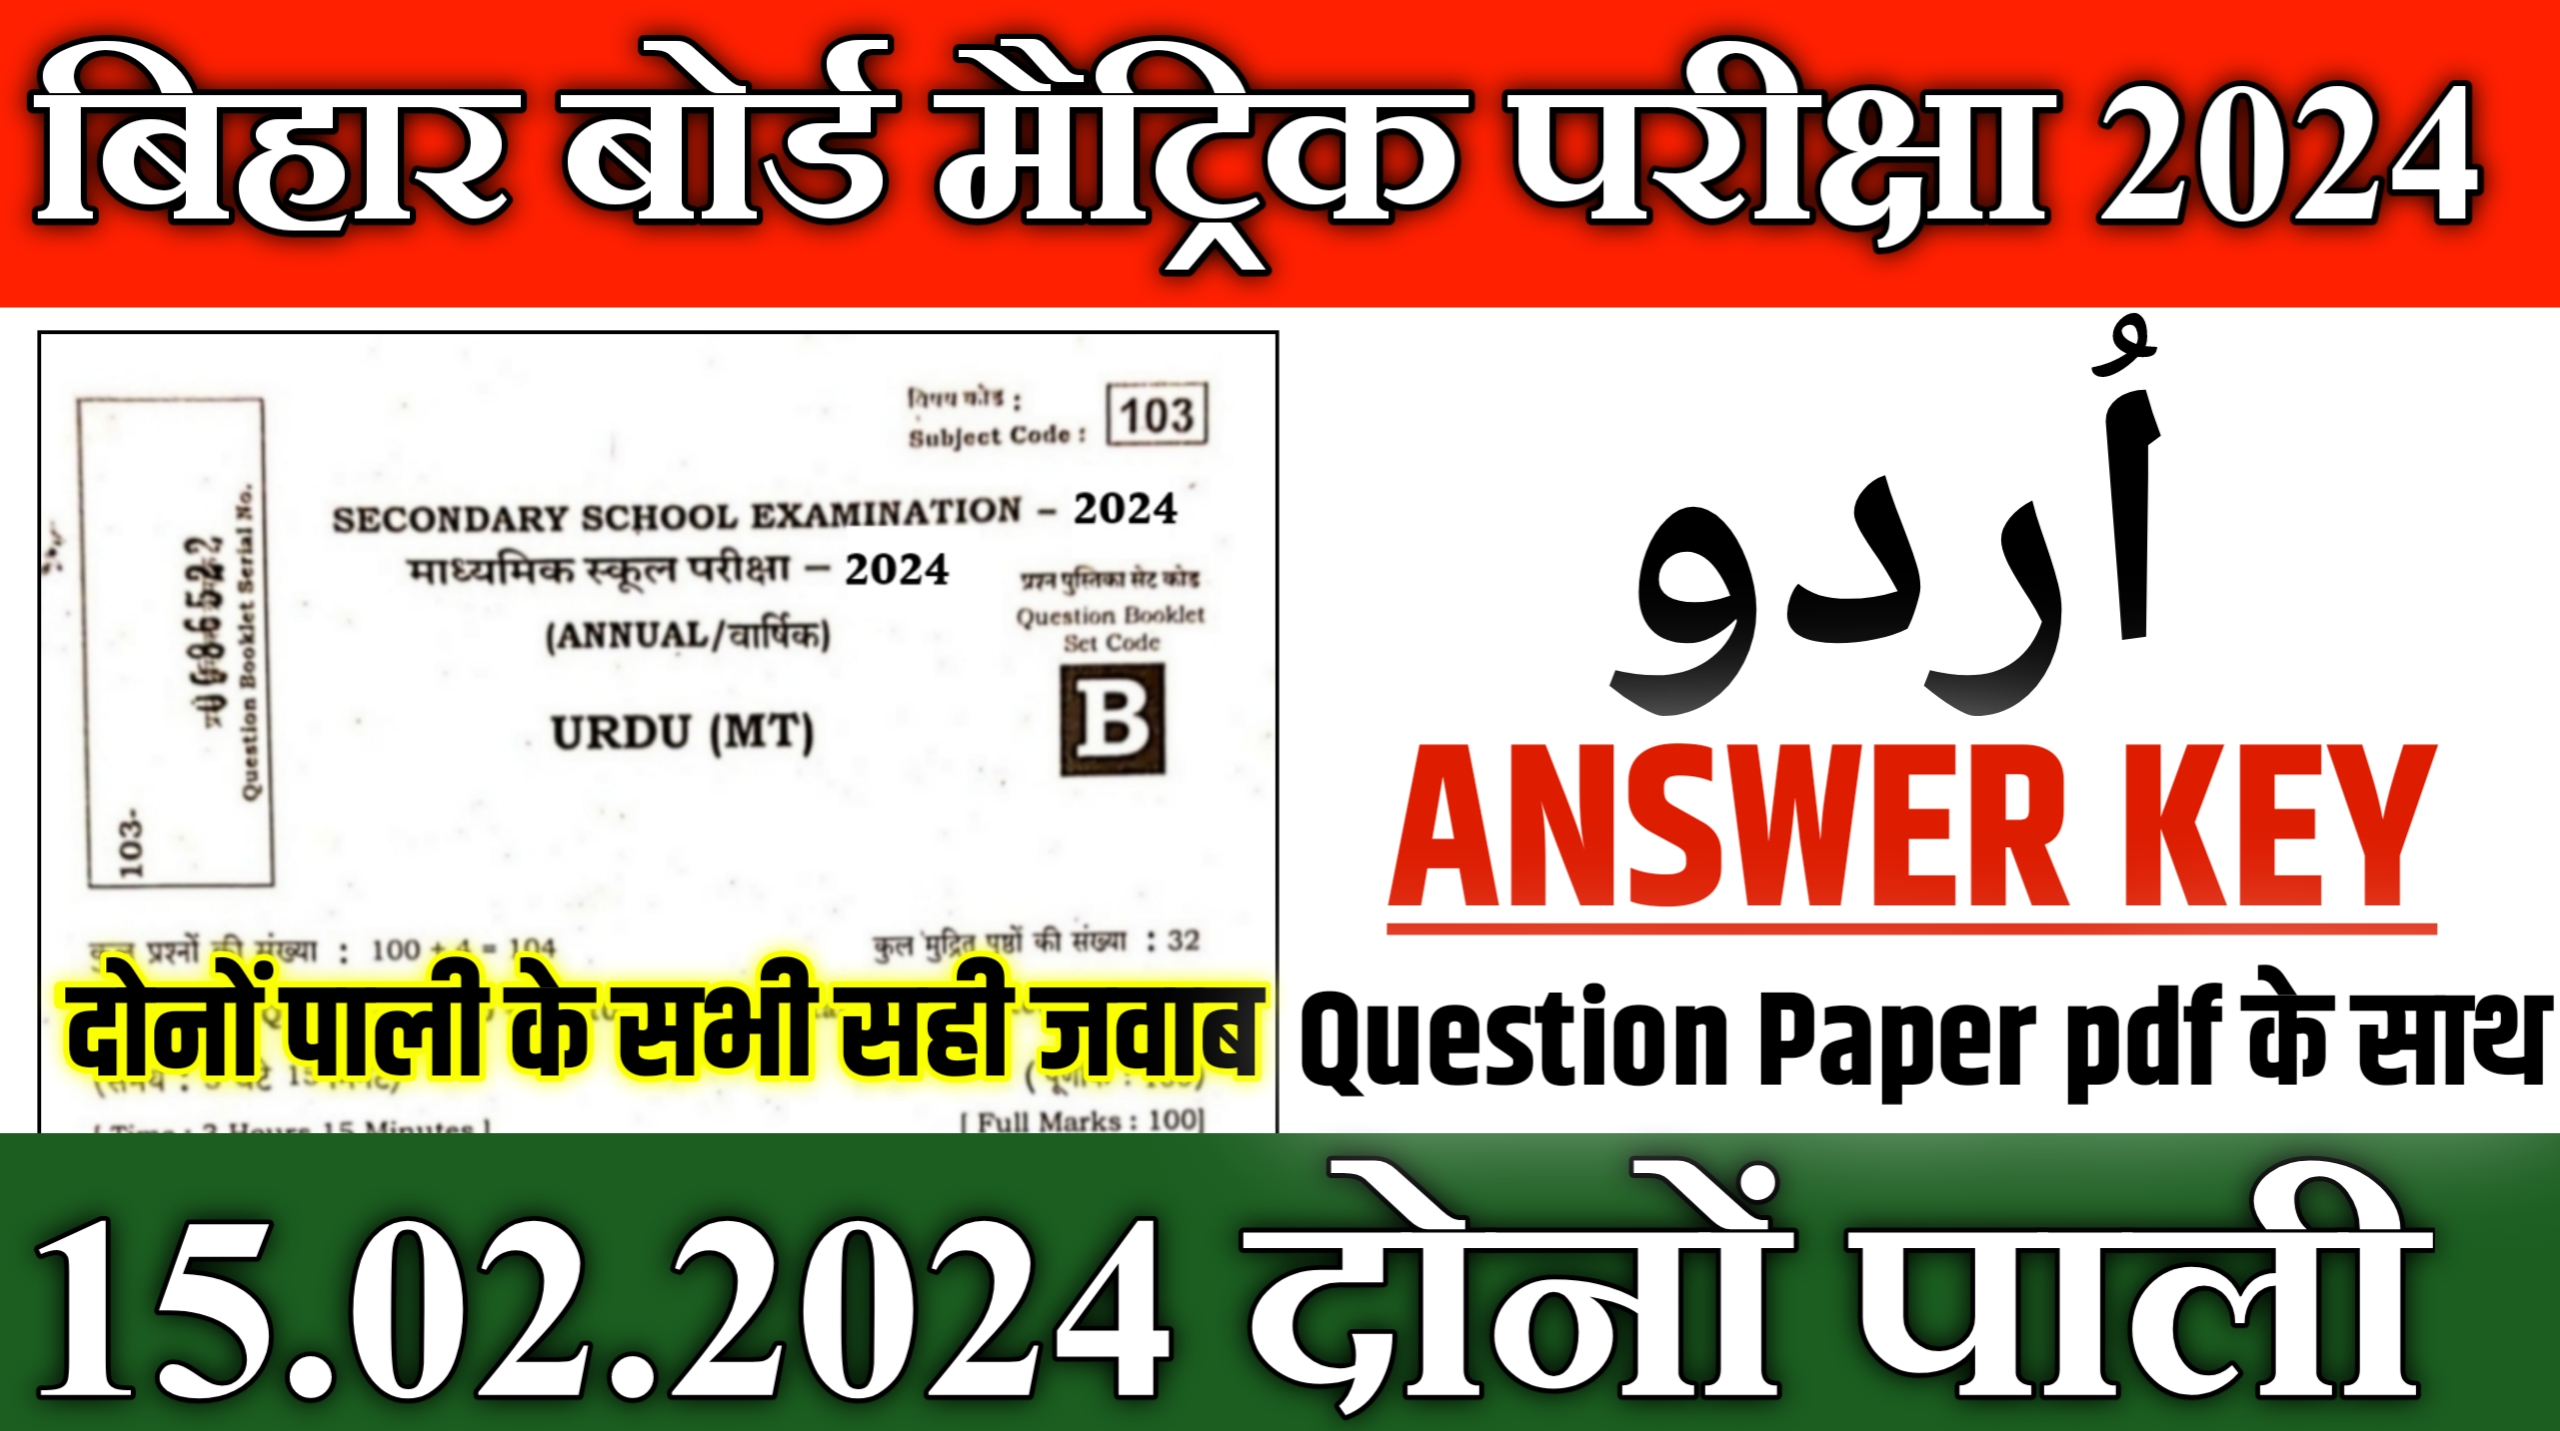 bihar board matric 10th urdu answer key 2024 with question paper pdf